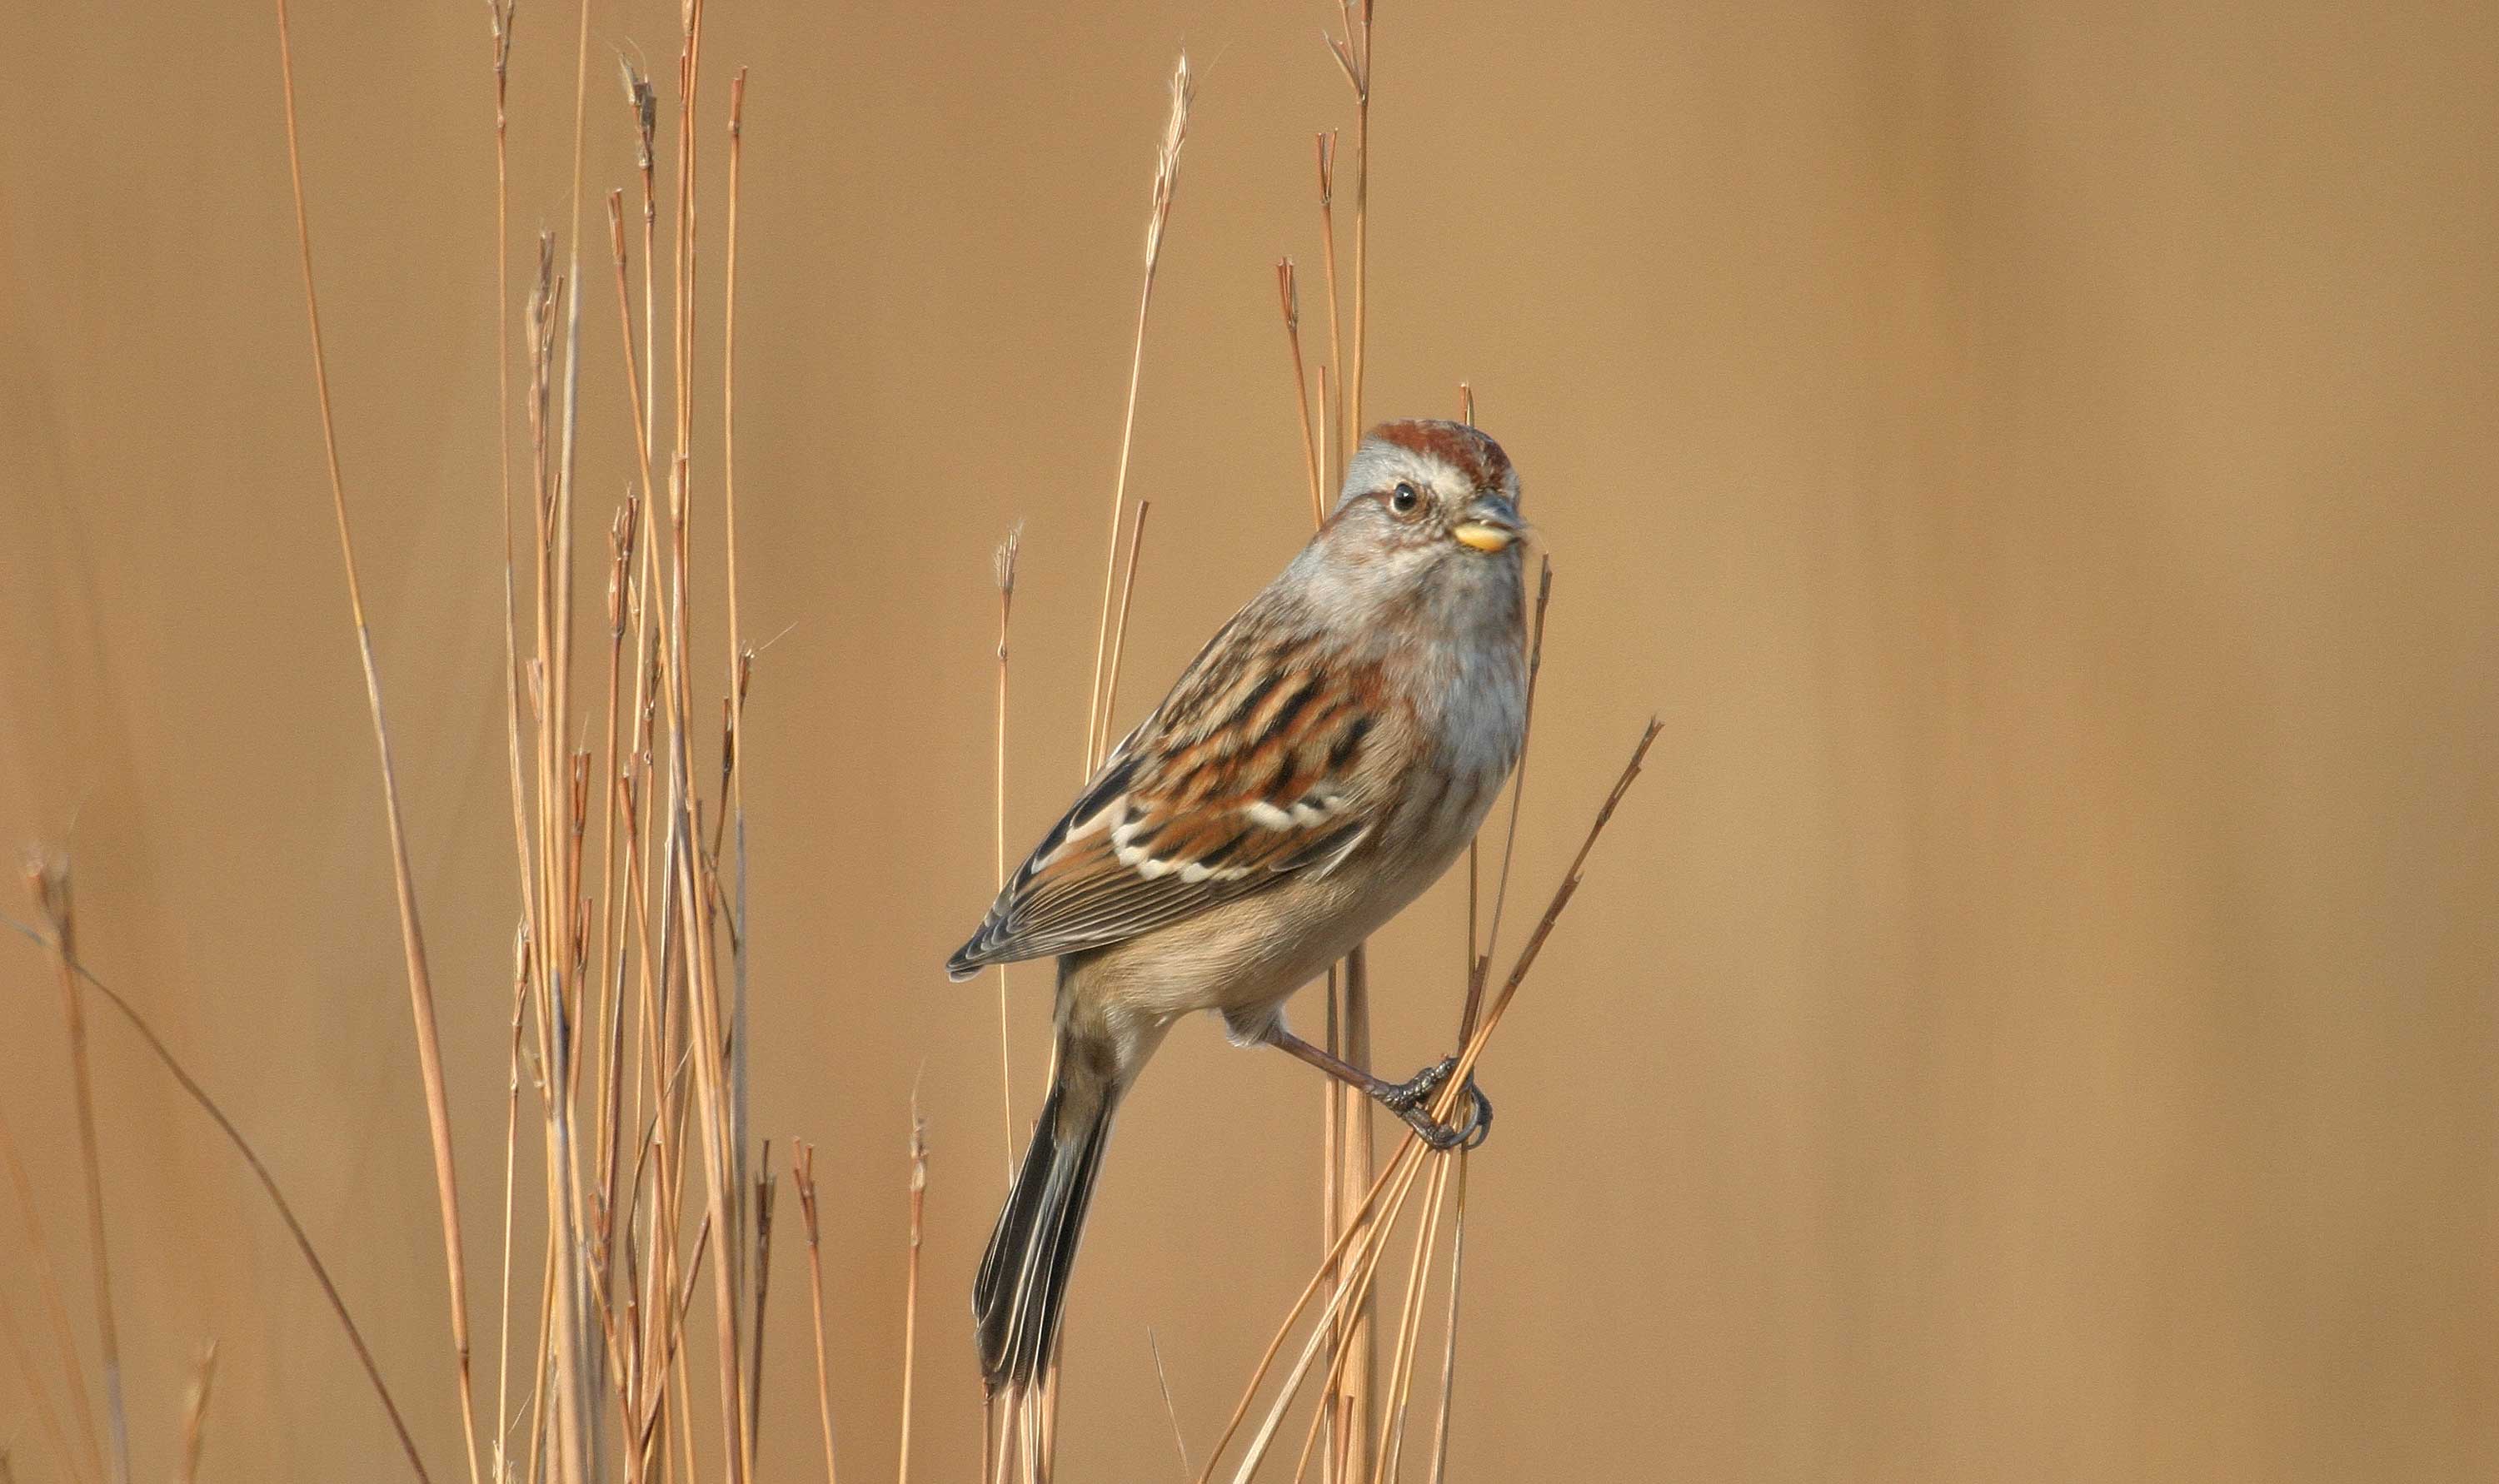 Tree sparrow on a stem.